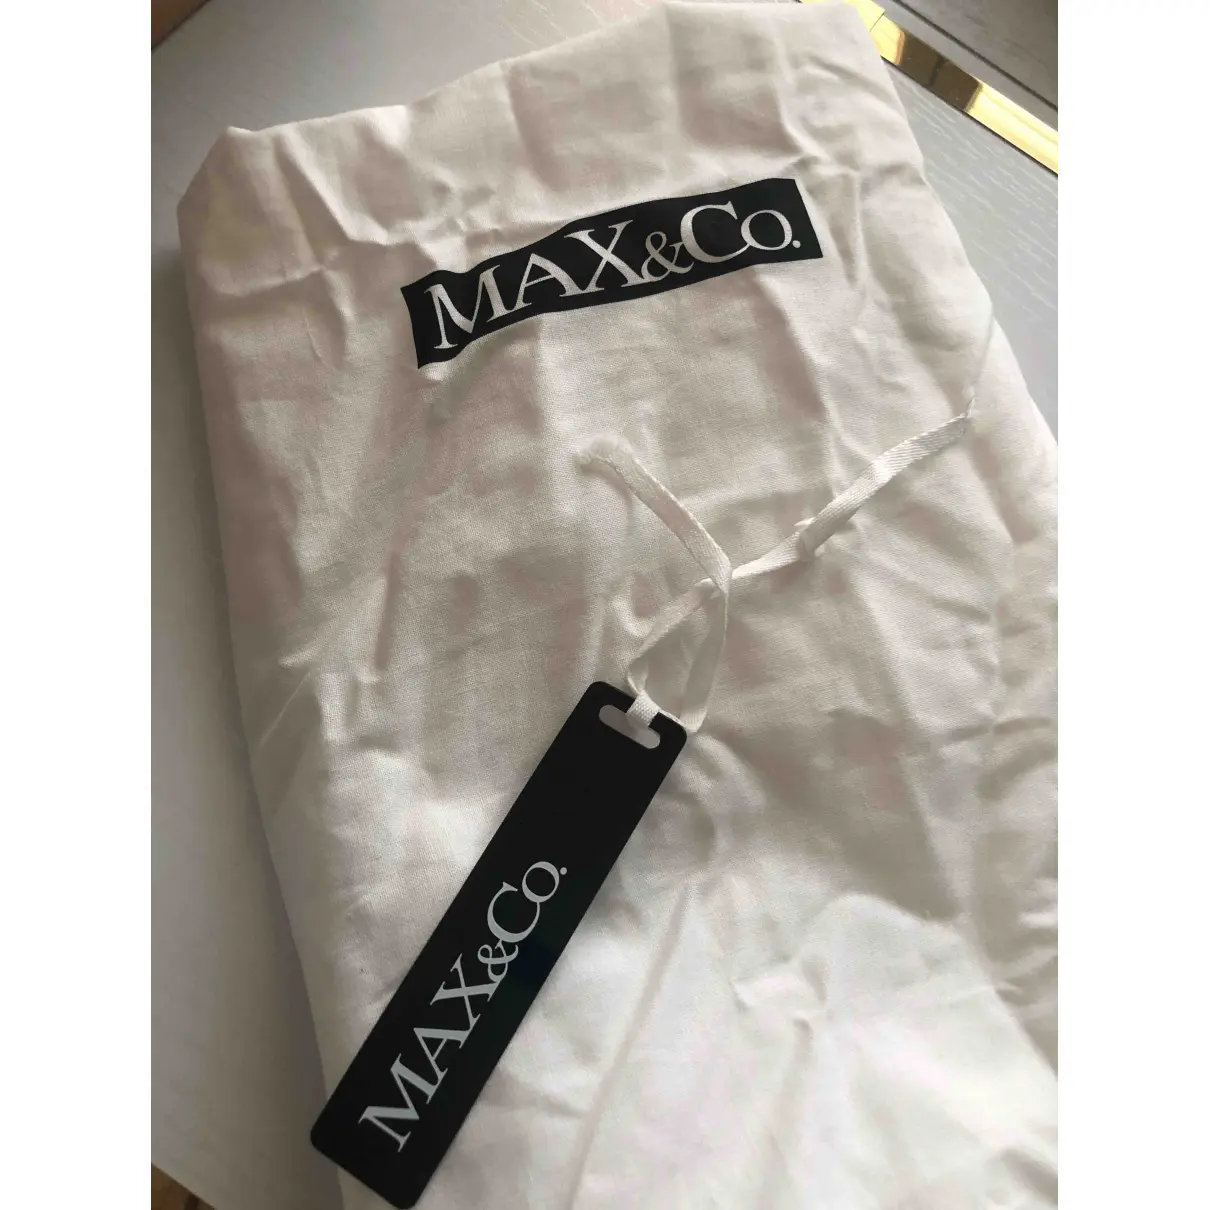 Clutch bag Max & Co